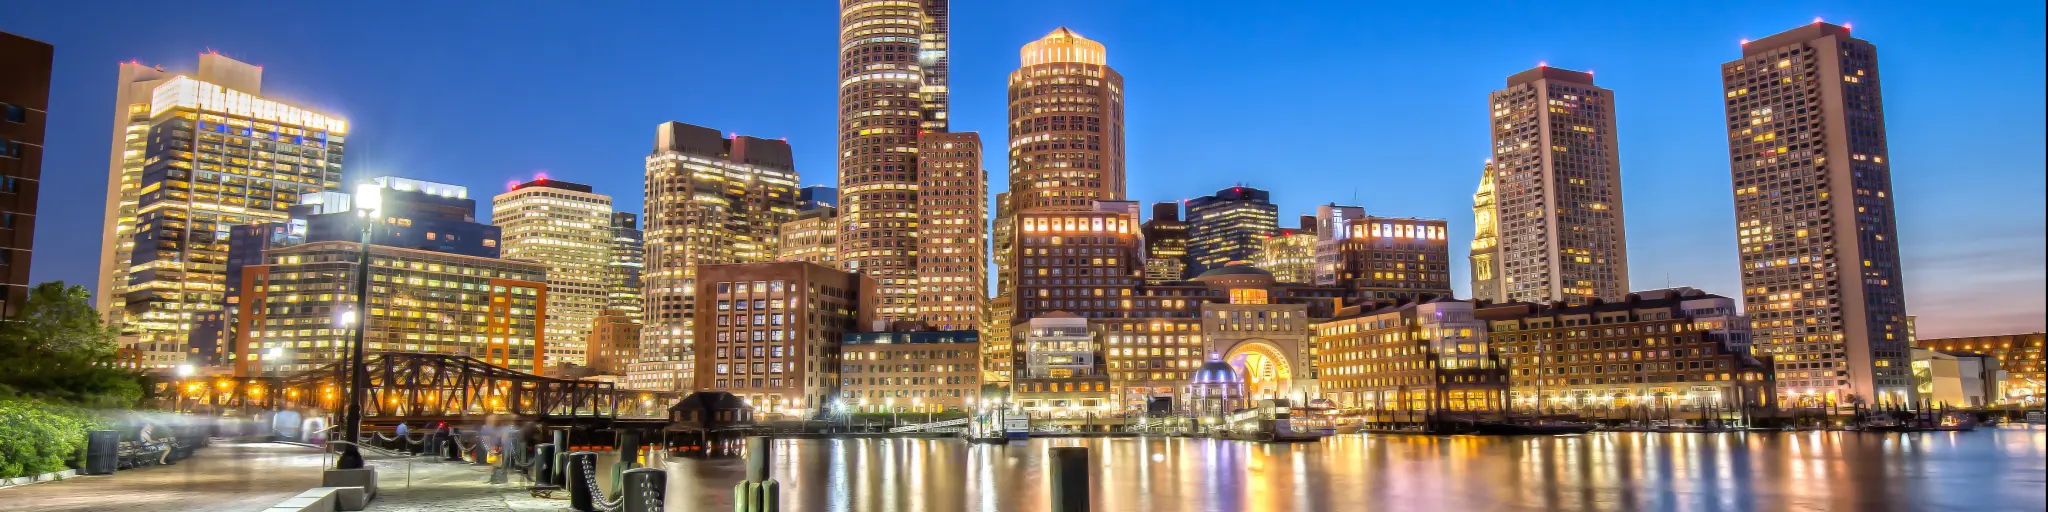 Downtown Boston as seen from Downtown Harborwalk at night - Boston, Massachusetts